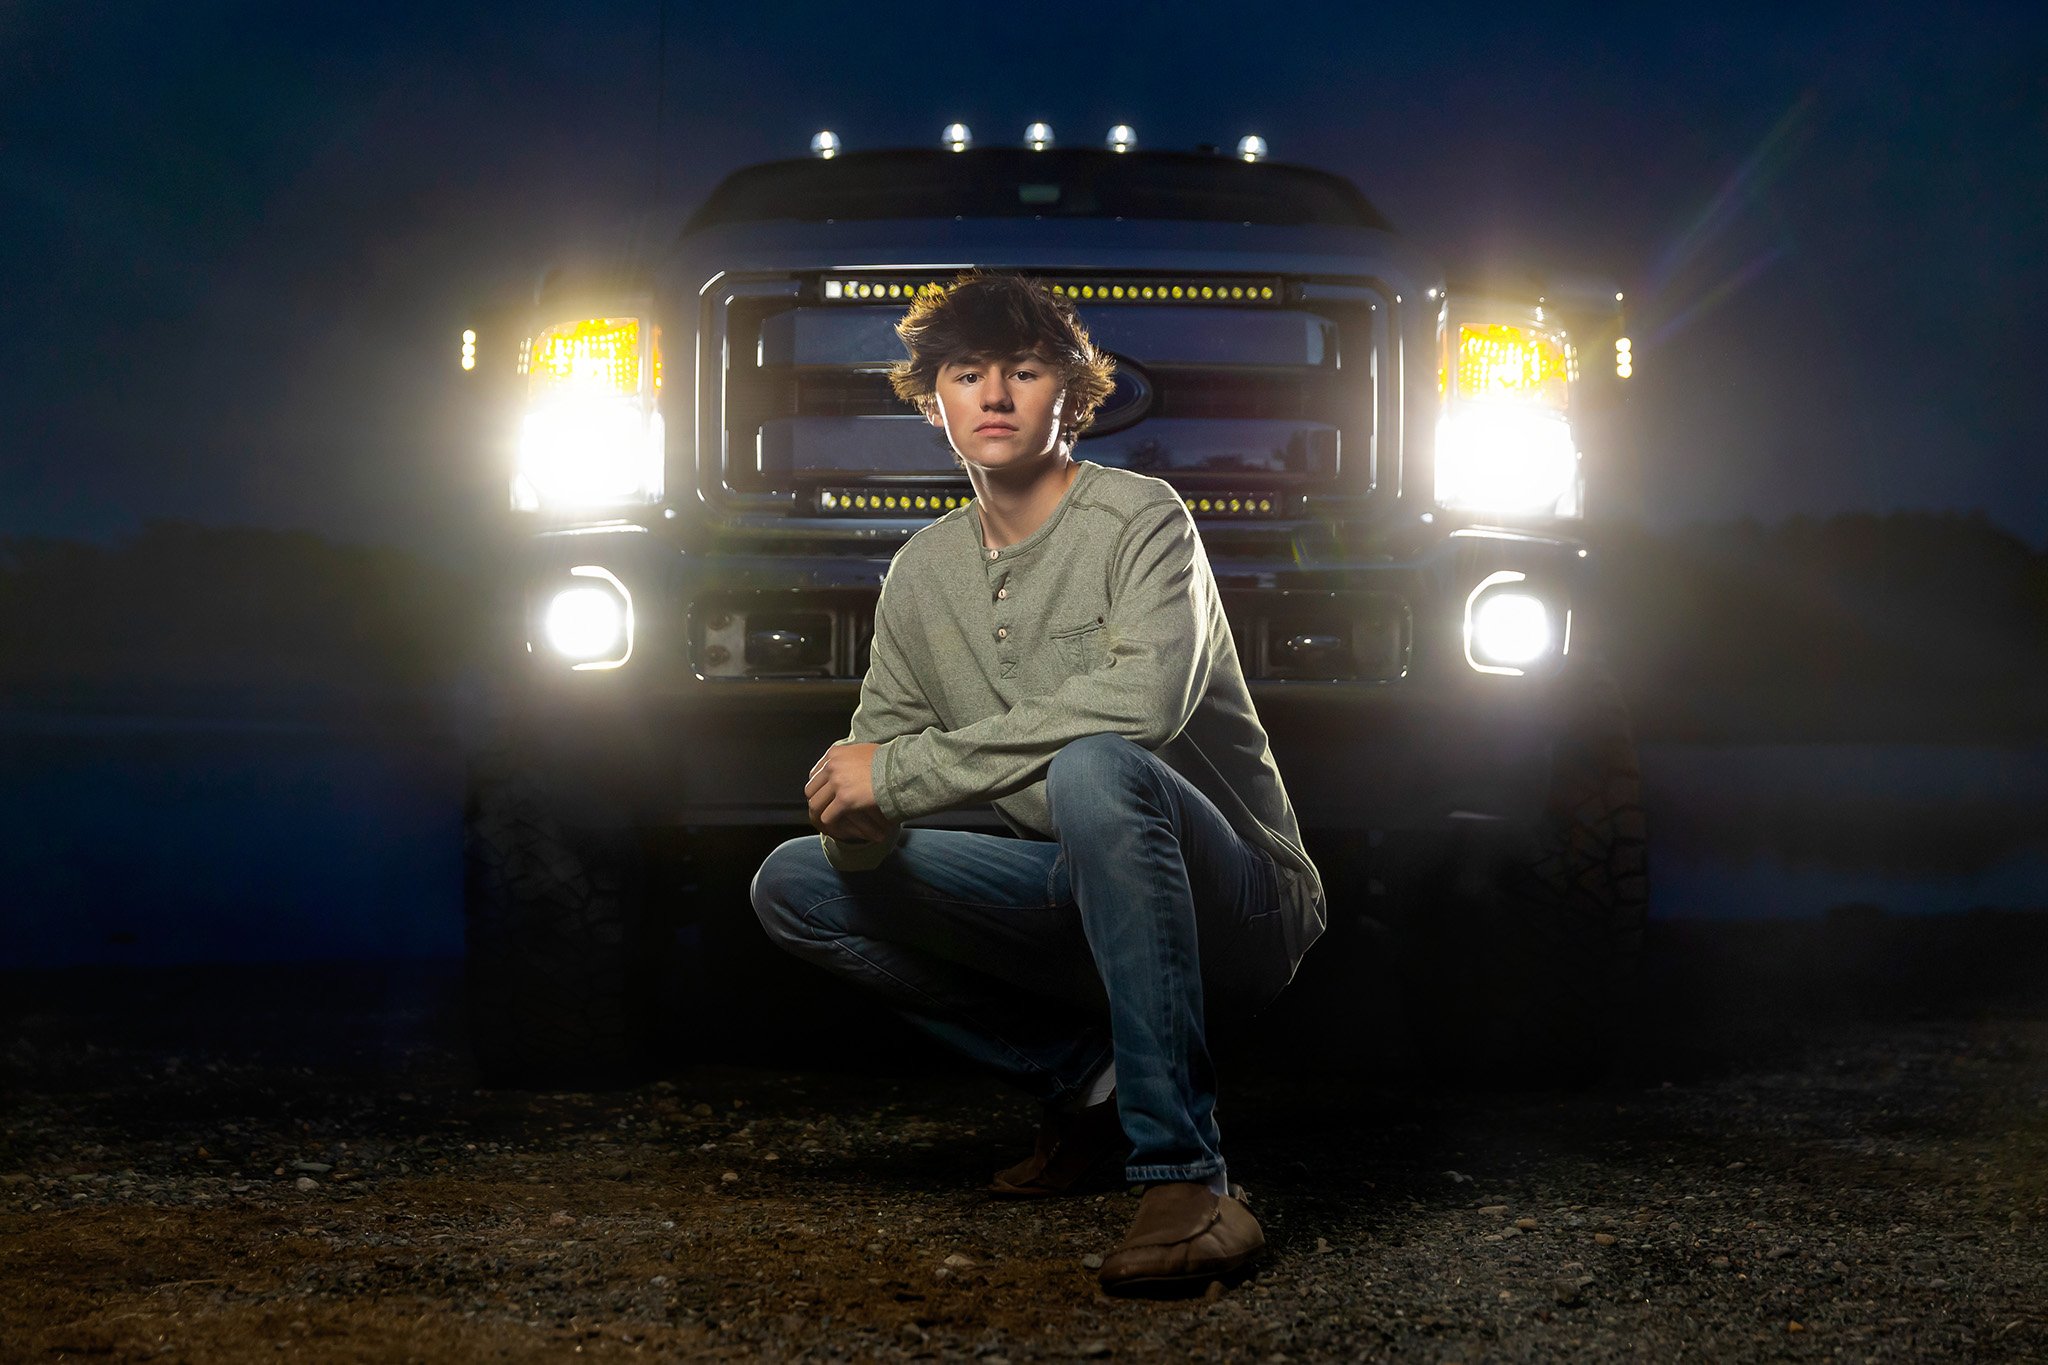 senior-boy-portrait-with-truck-at-night.jpg